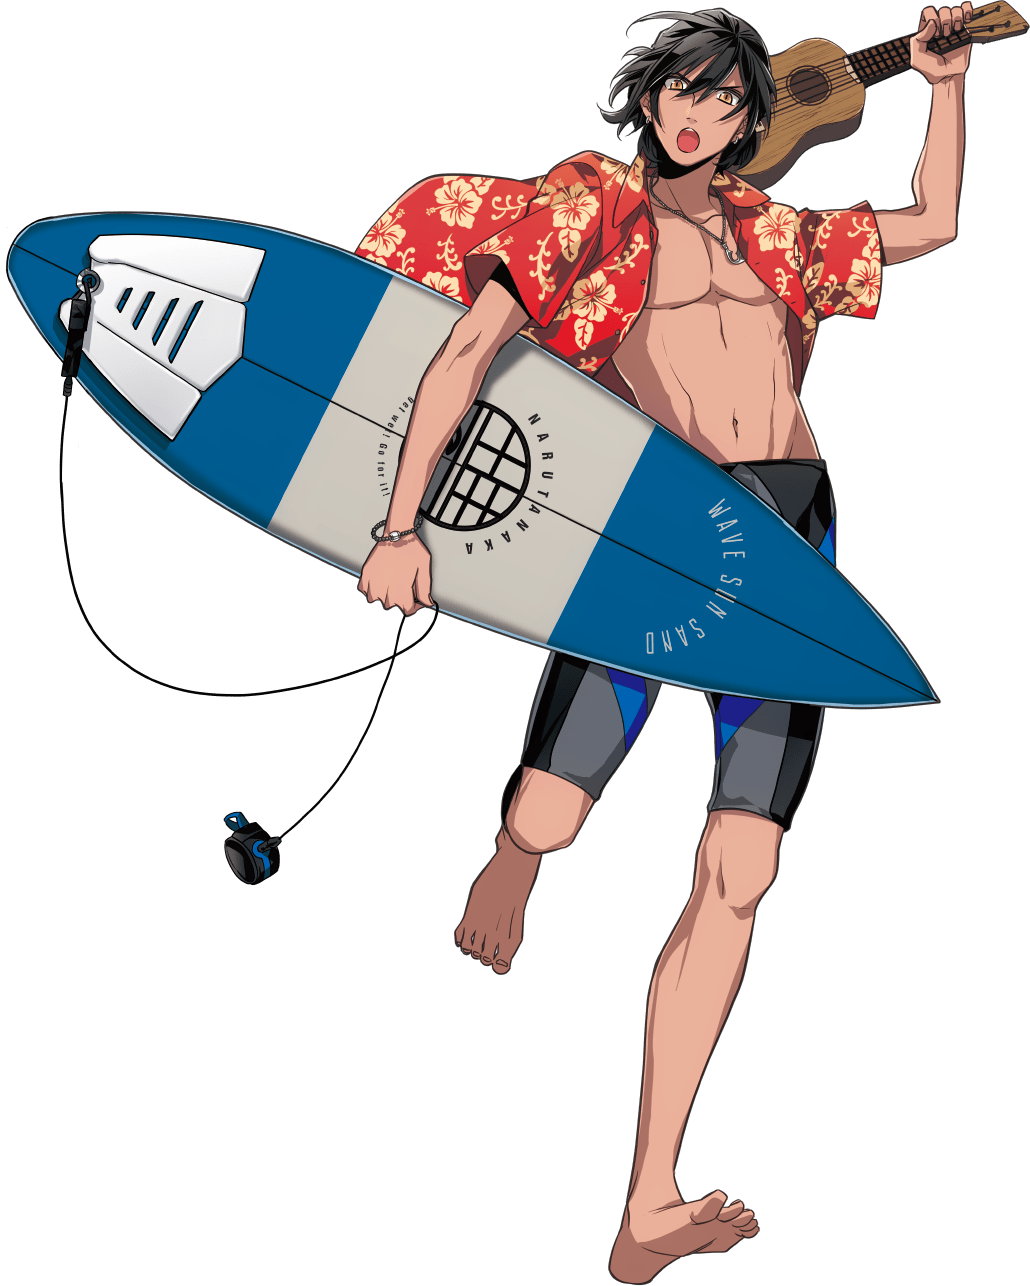 iPhoneXpapers.com | iPhone X wallpaper | aj86-surfing-girl-anime -illust-art-sea-sports